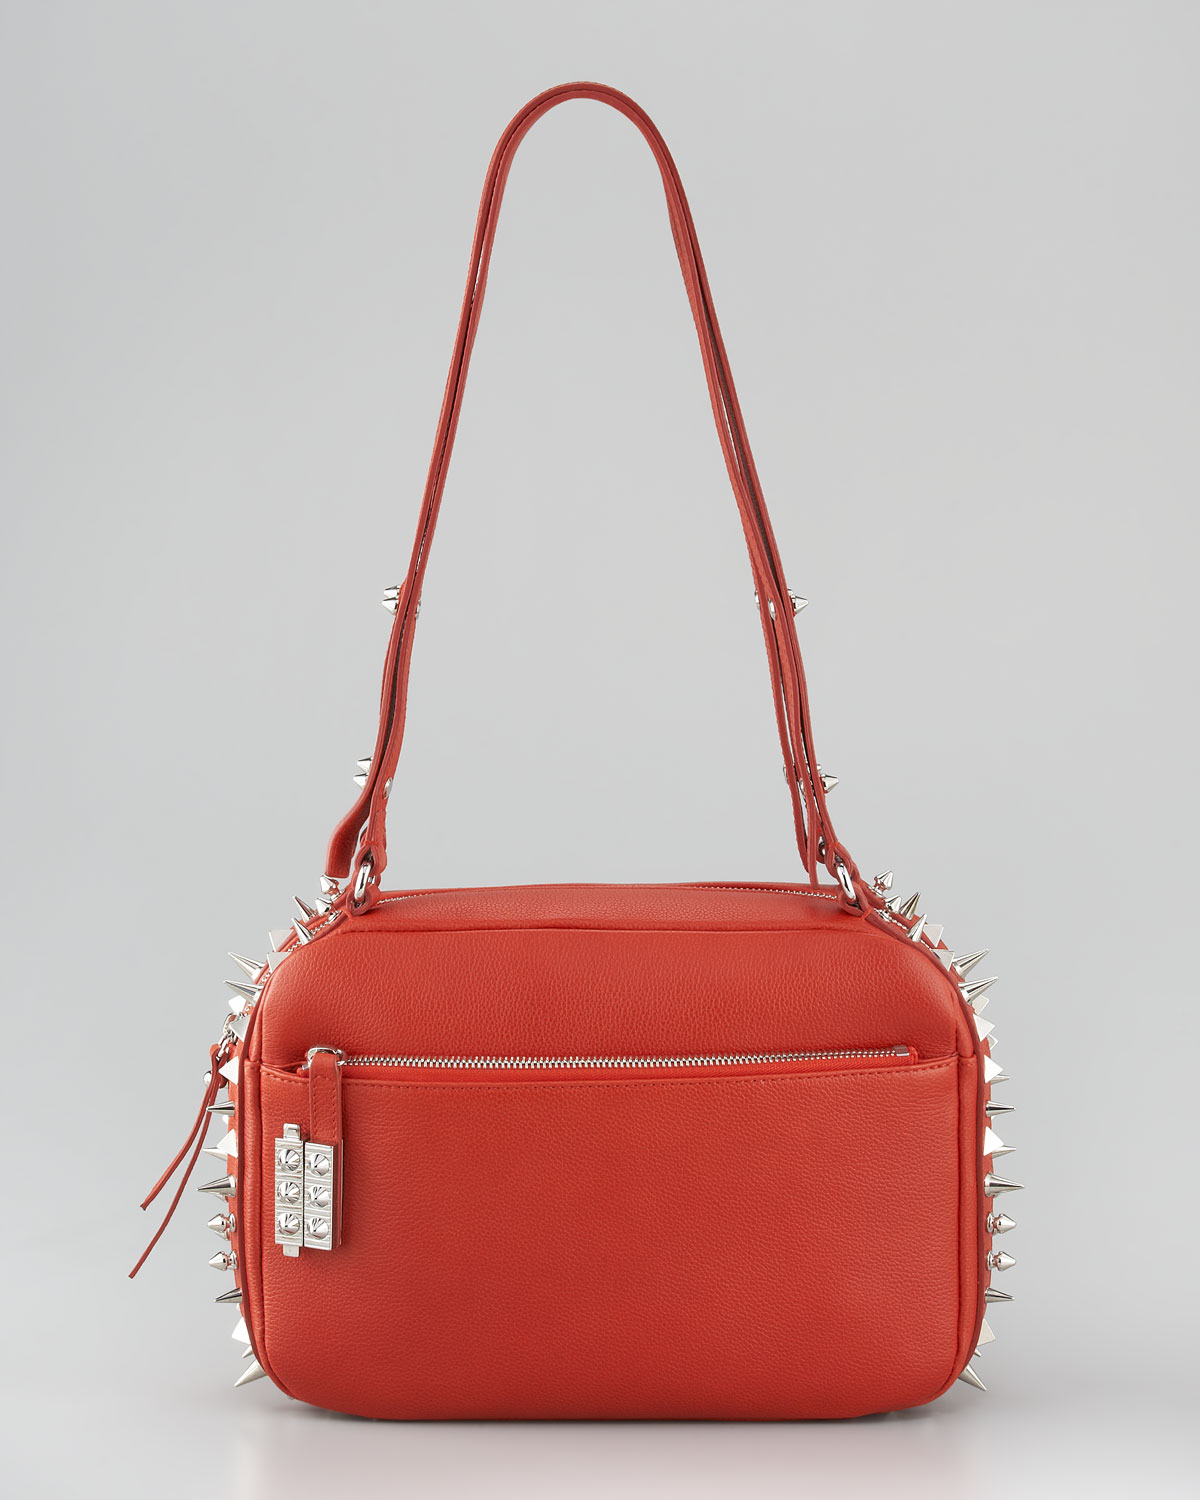 Christian Louboutin Roxanne Medium Shoulder Bag in Red - Lyst